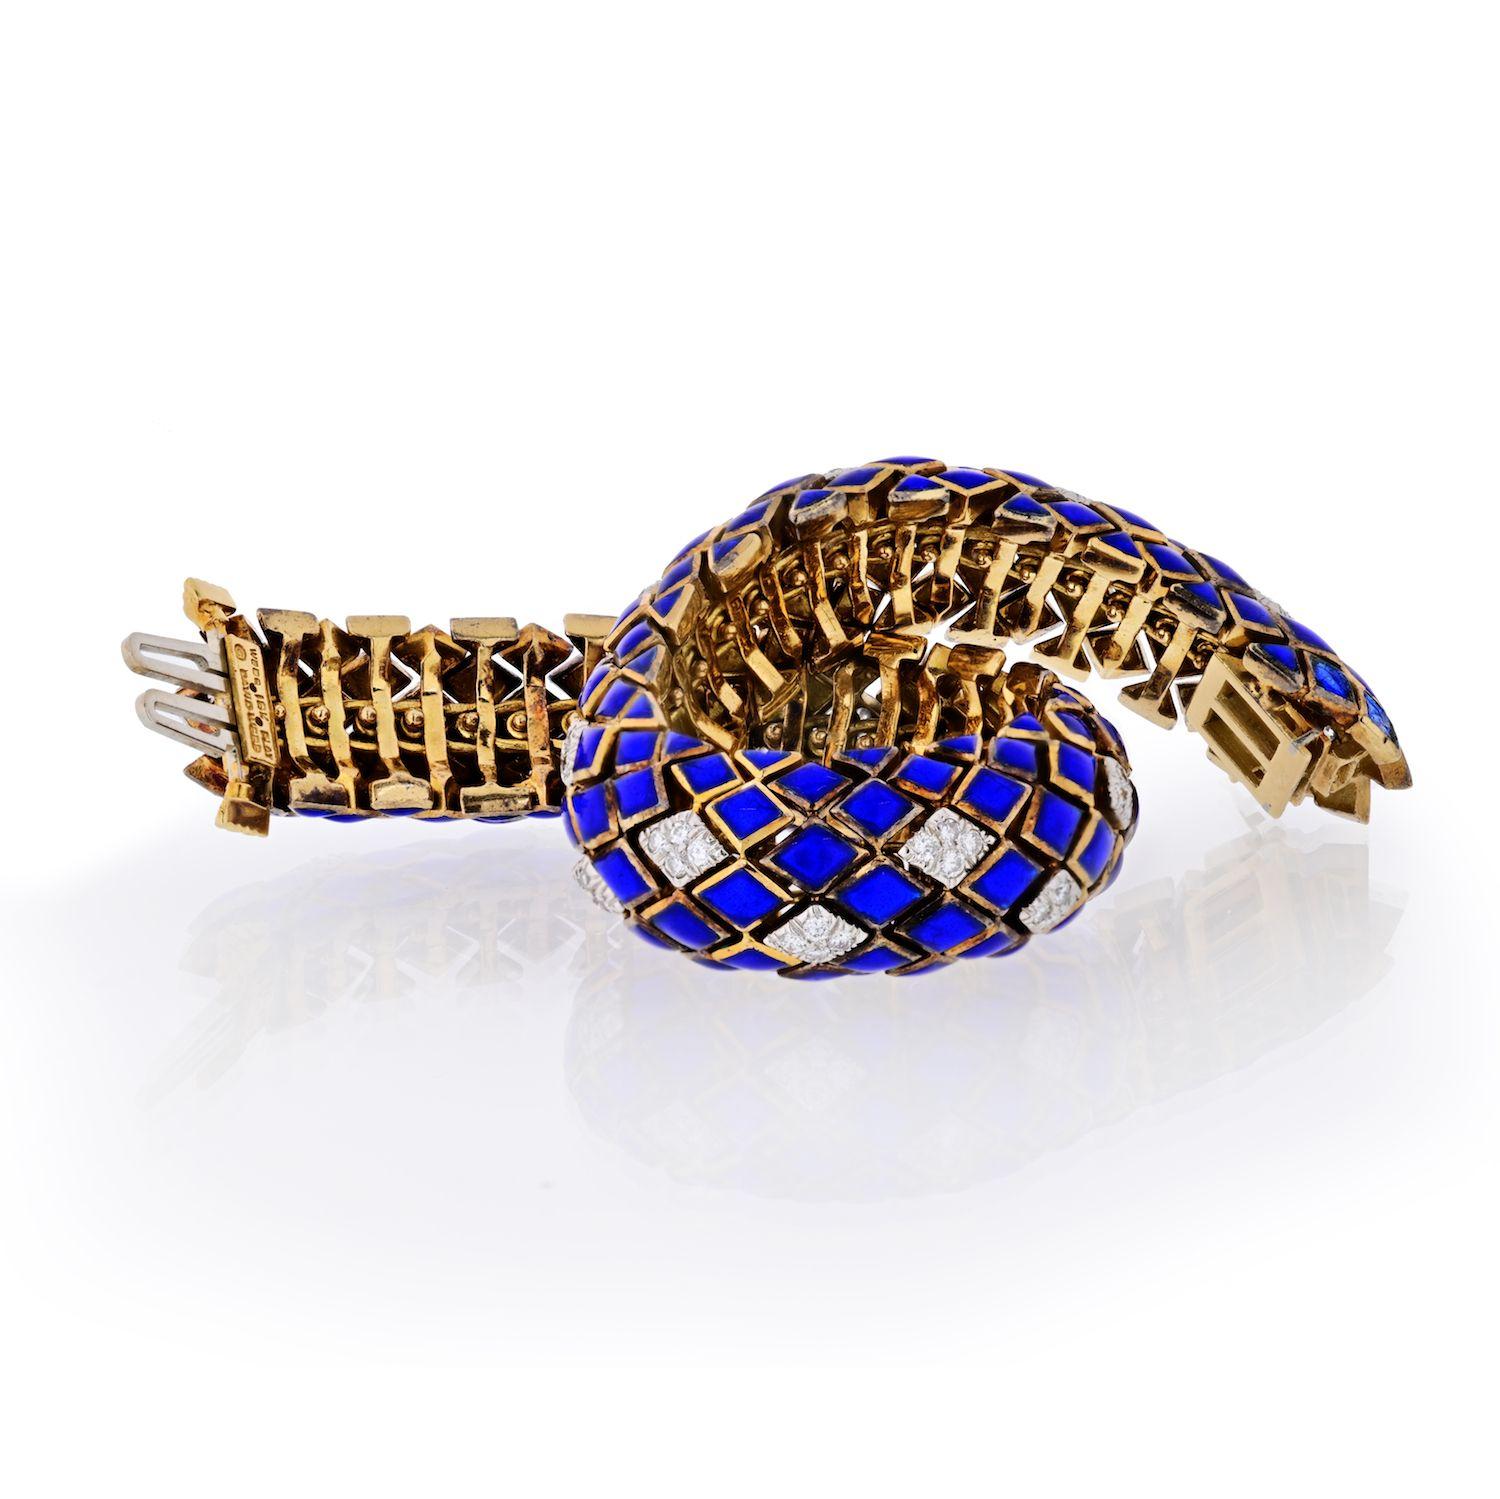 Diamond, enamel and eighteen karat gold bracelet, David Webb convex diamond shape links in blue enamel highlighted by round brilliant-cut diamond set links; estimated total diamond weight: 2.30 carats. Length 7 inches. Width: 15mm. Condition: